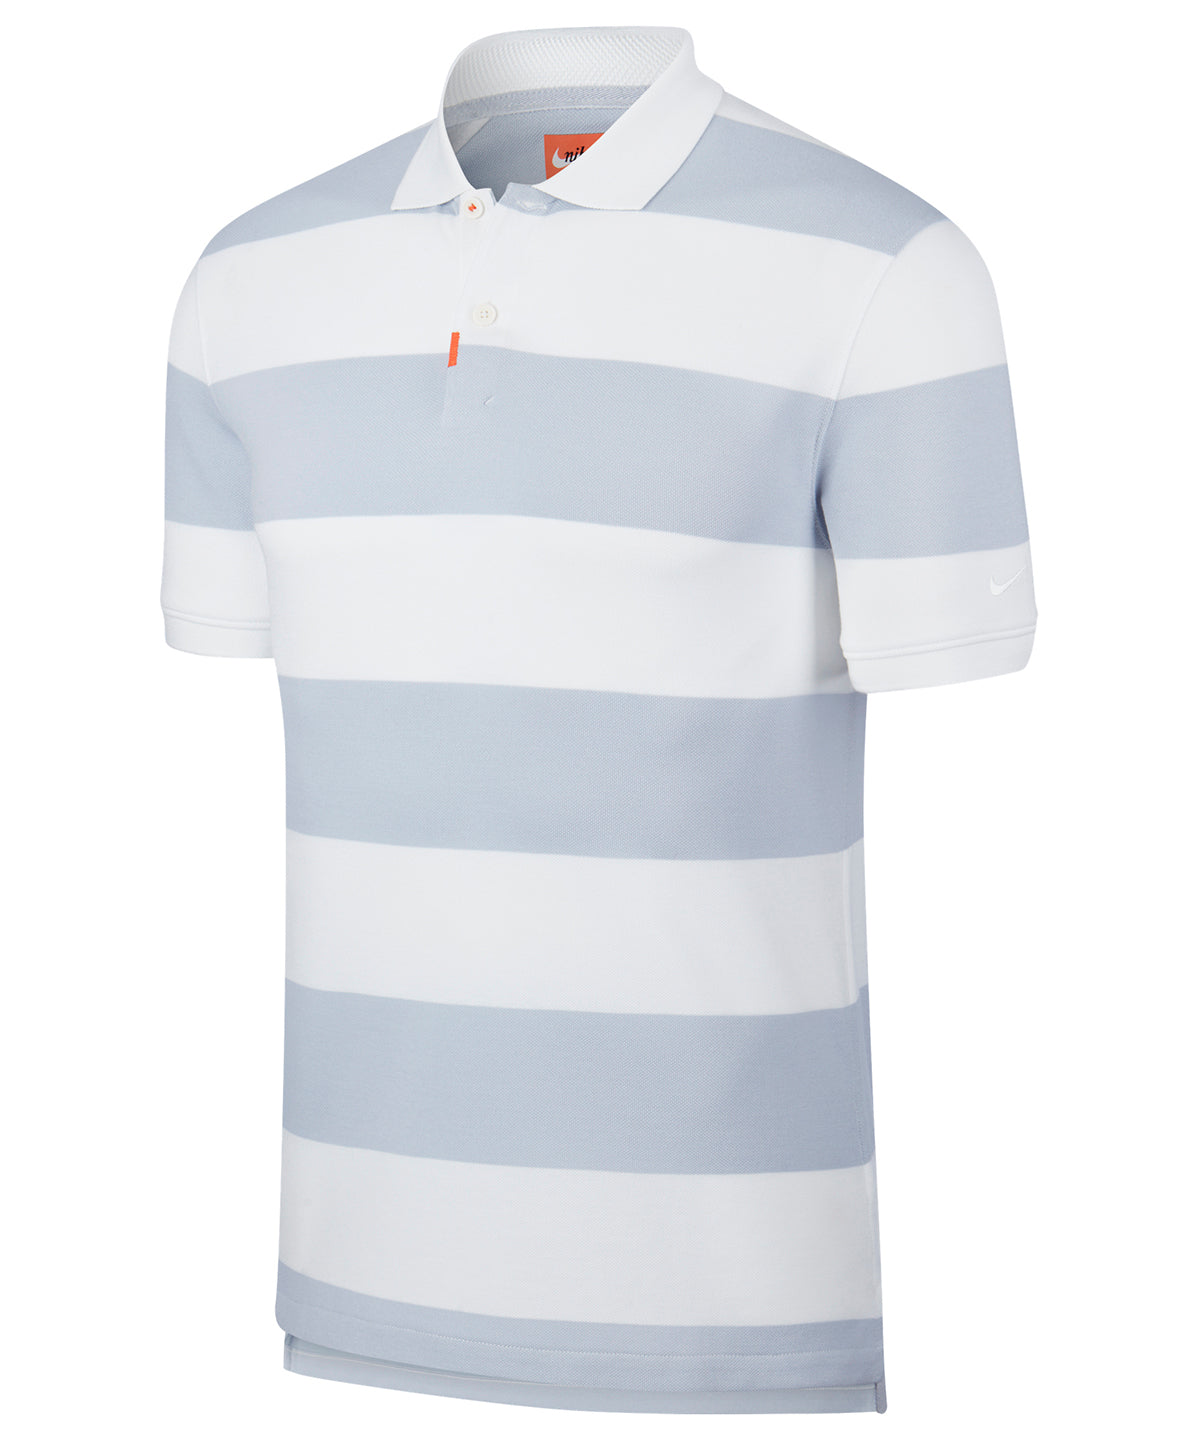 Personalised Polo Shirts - Stripes Nike The Nike polo golf stripe slim